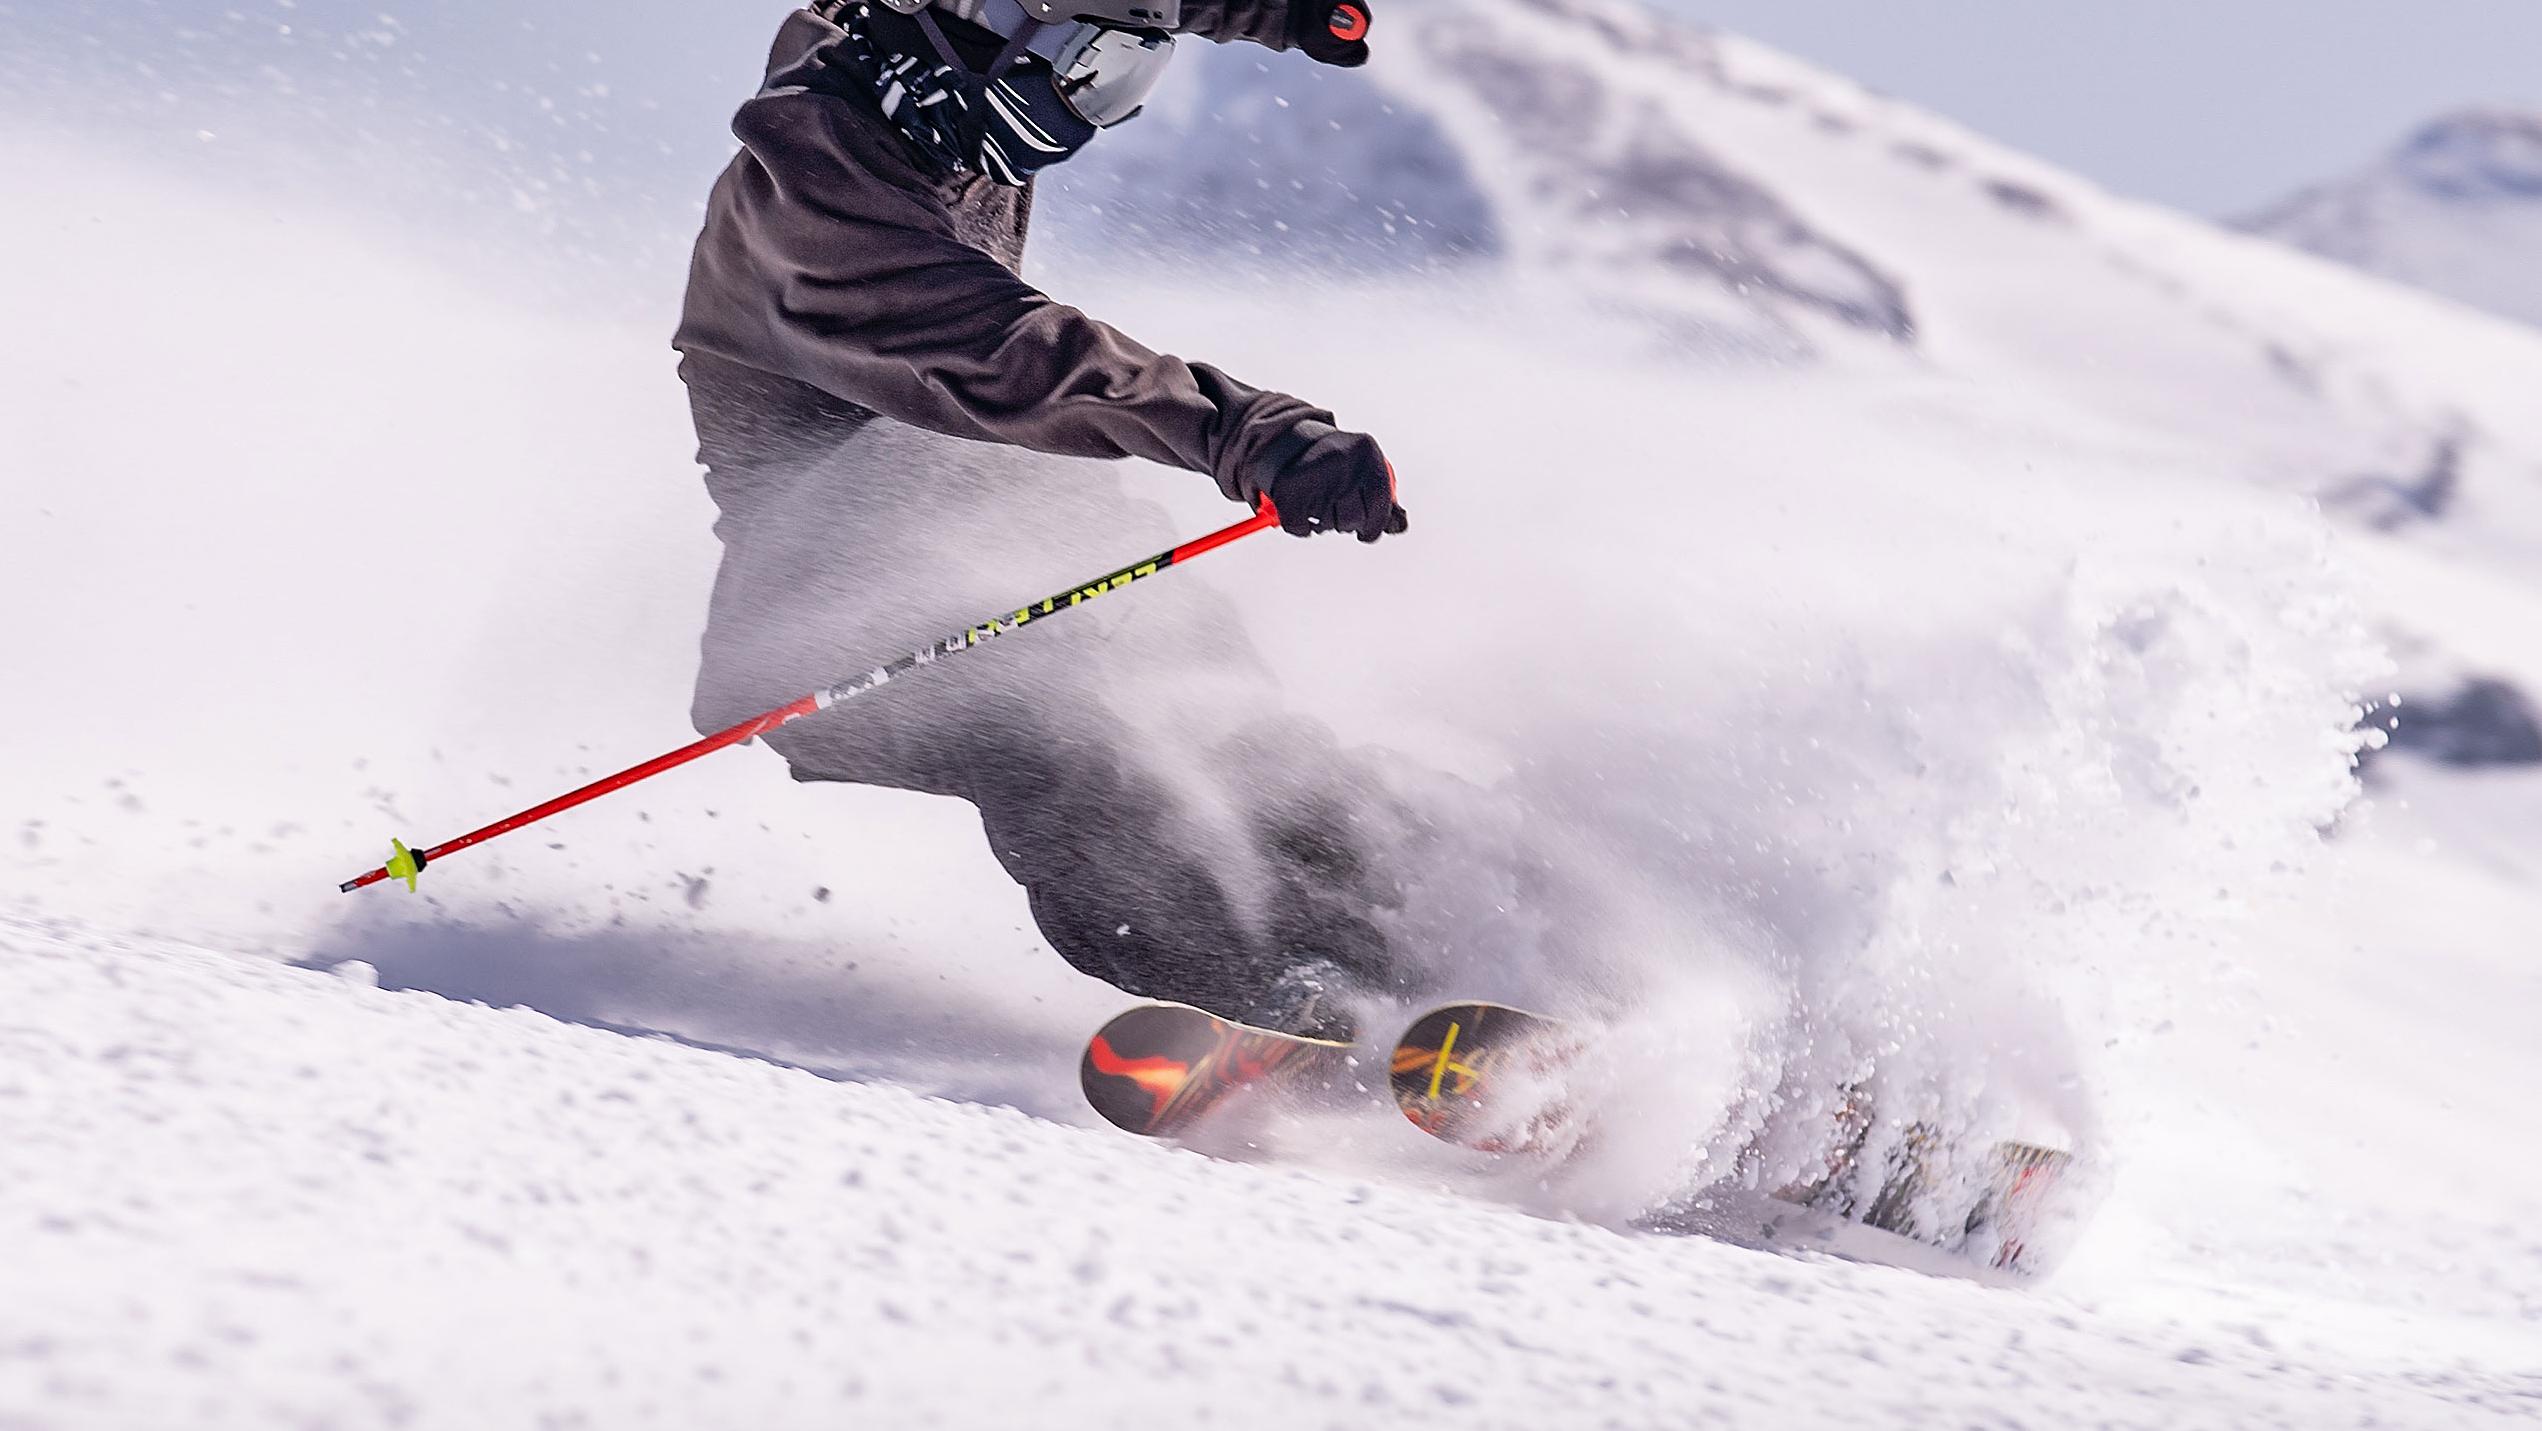 The Vacation "BATTLE ROYAL" Prof. York x J Collab Limited Edition Ski Shredding Image